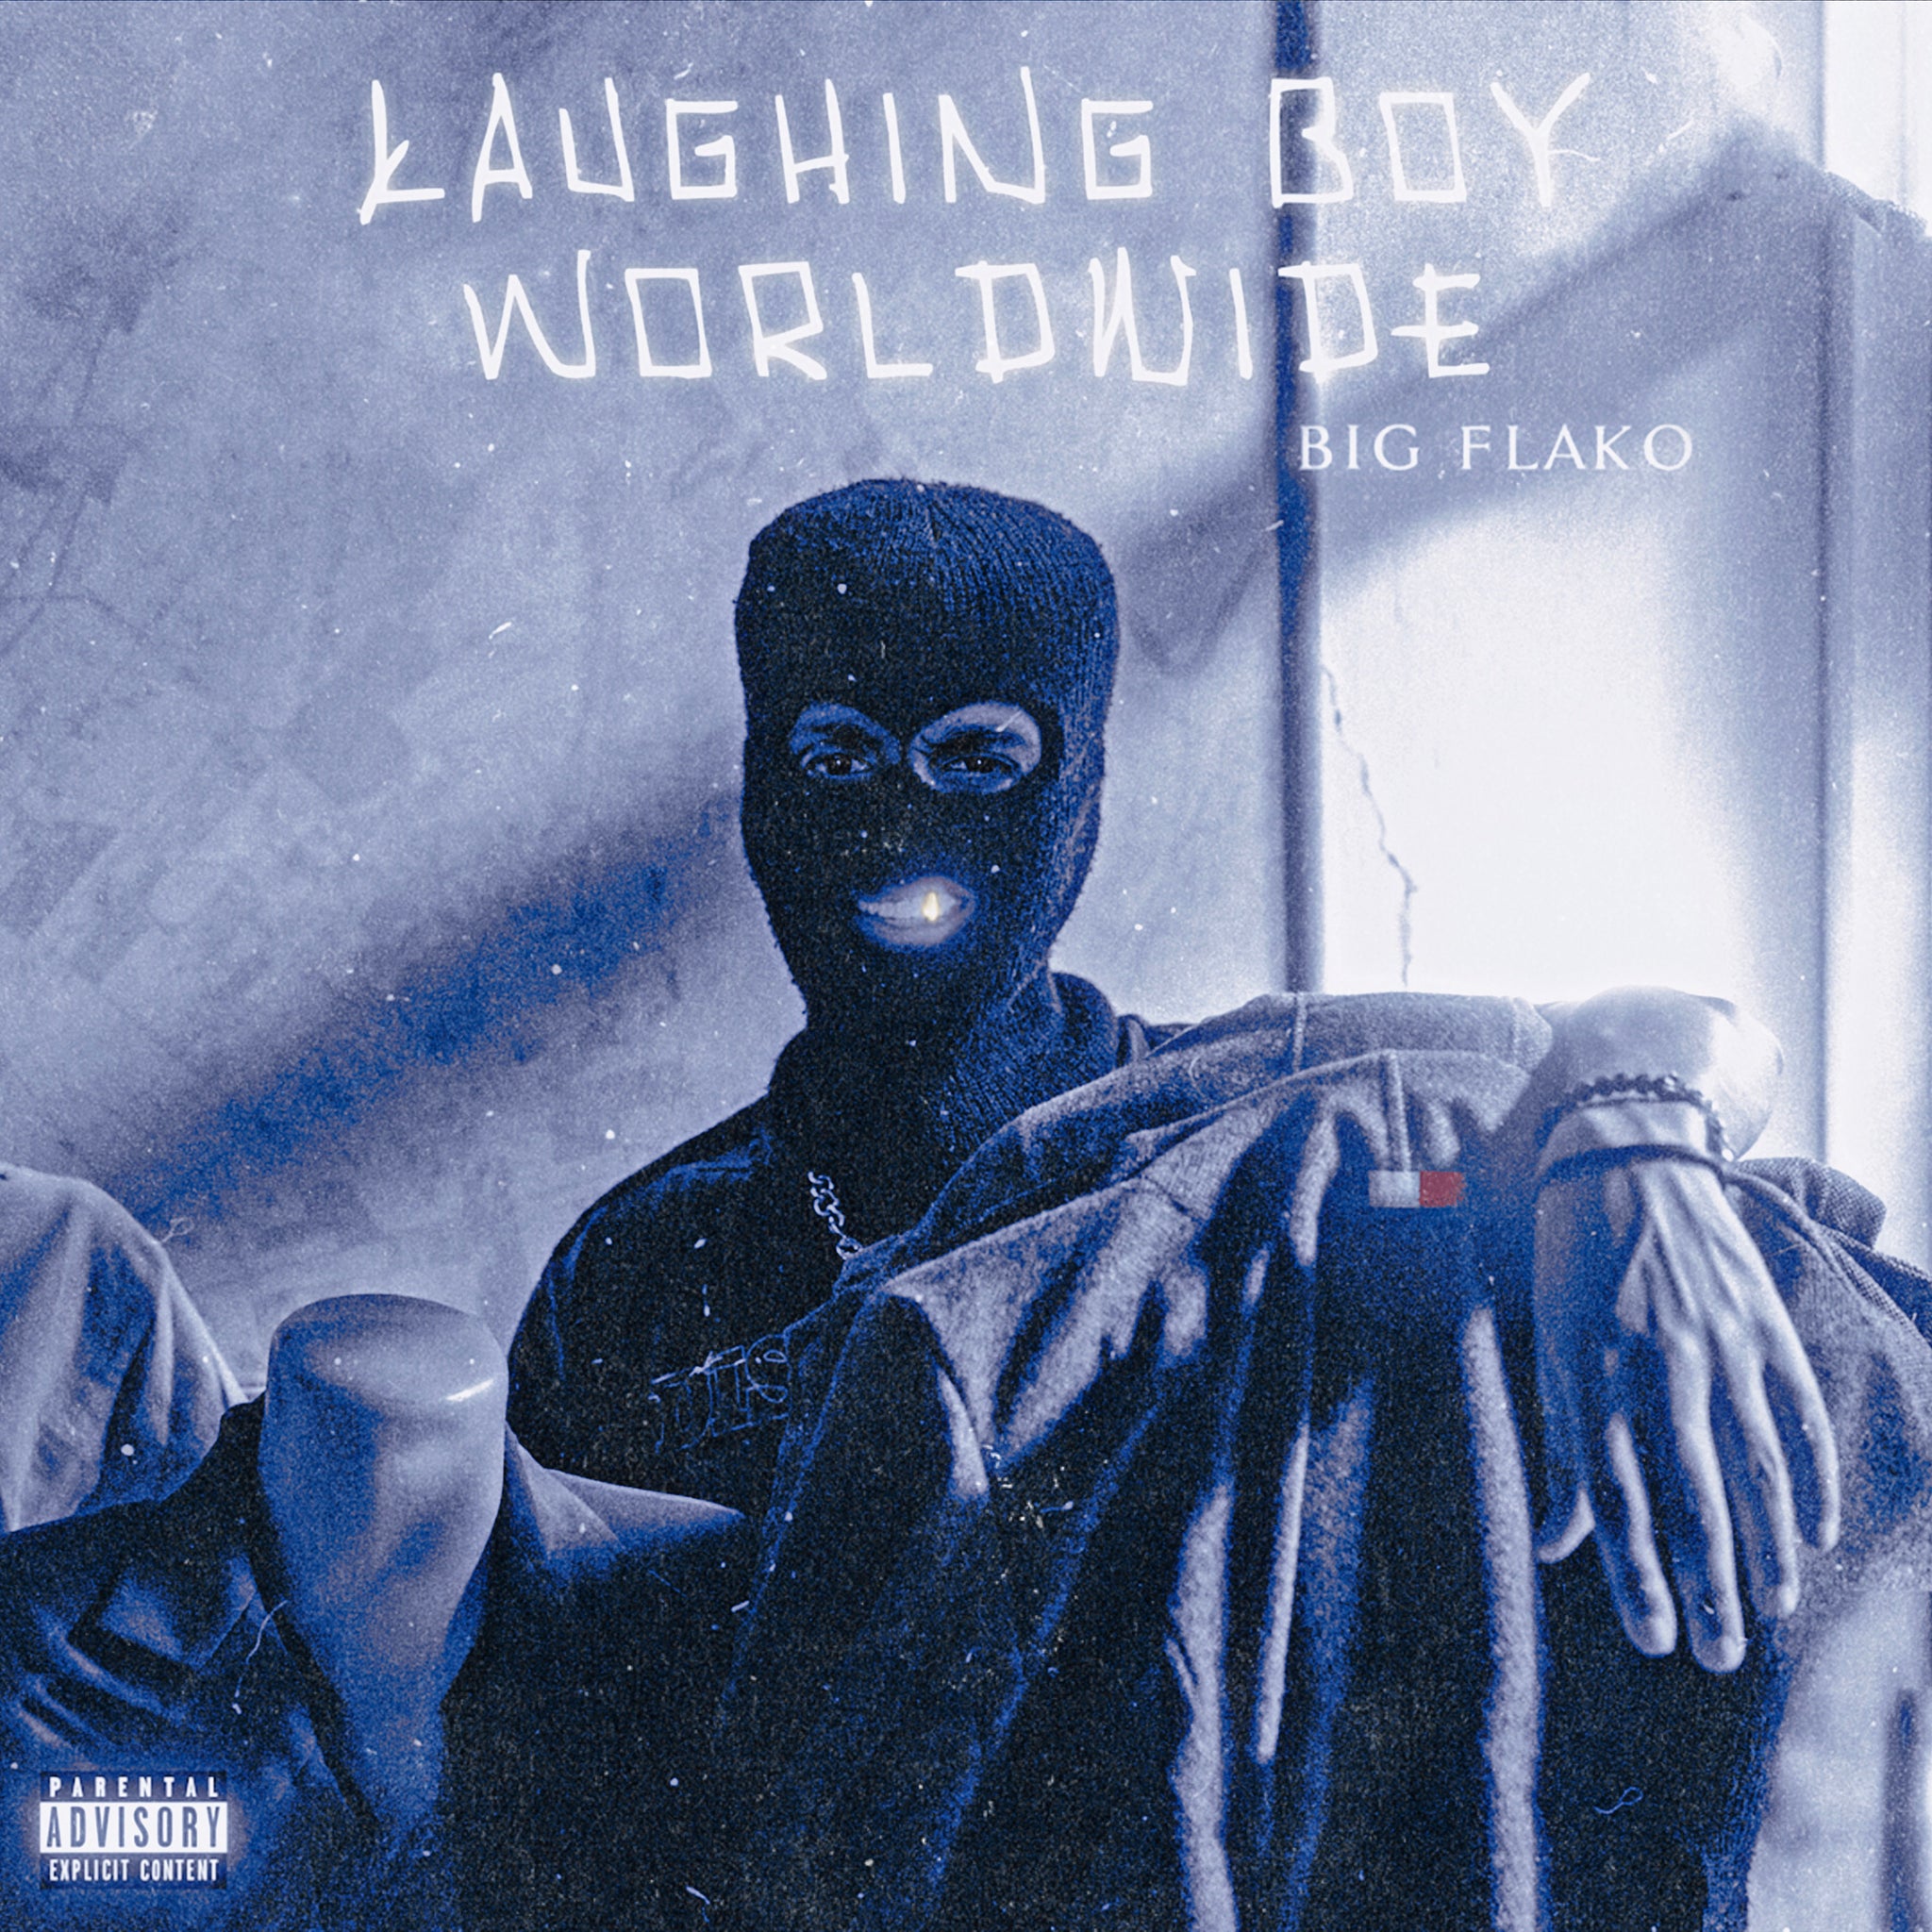 Laughing Boy Worldwide by BIG FLAKO